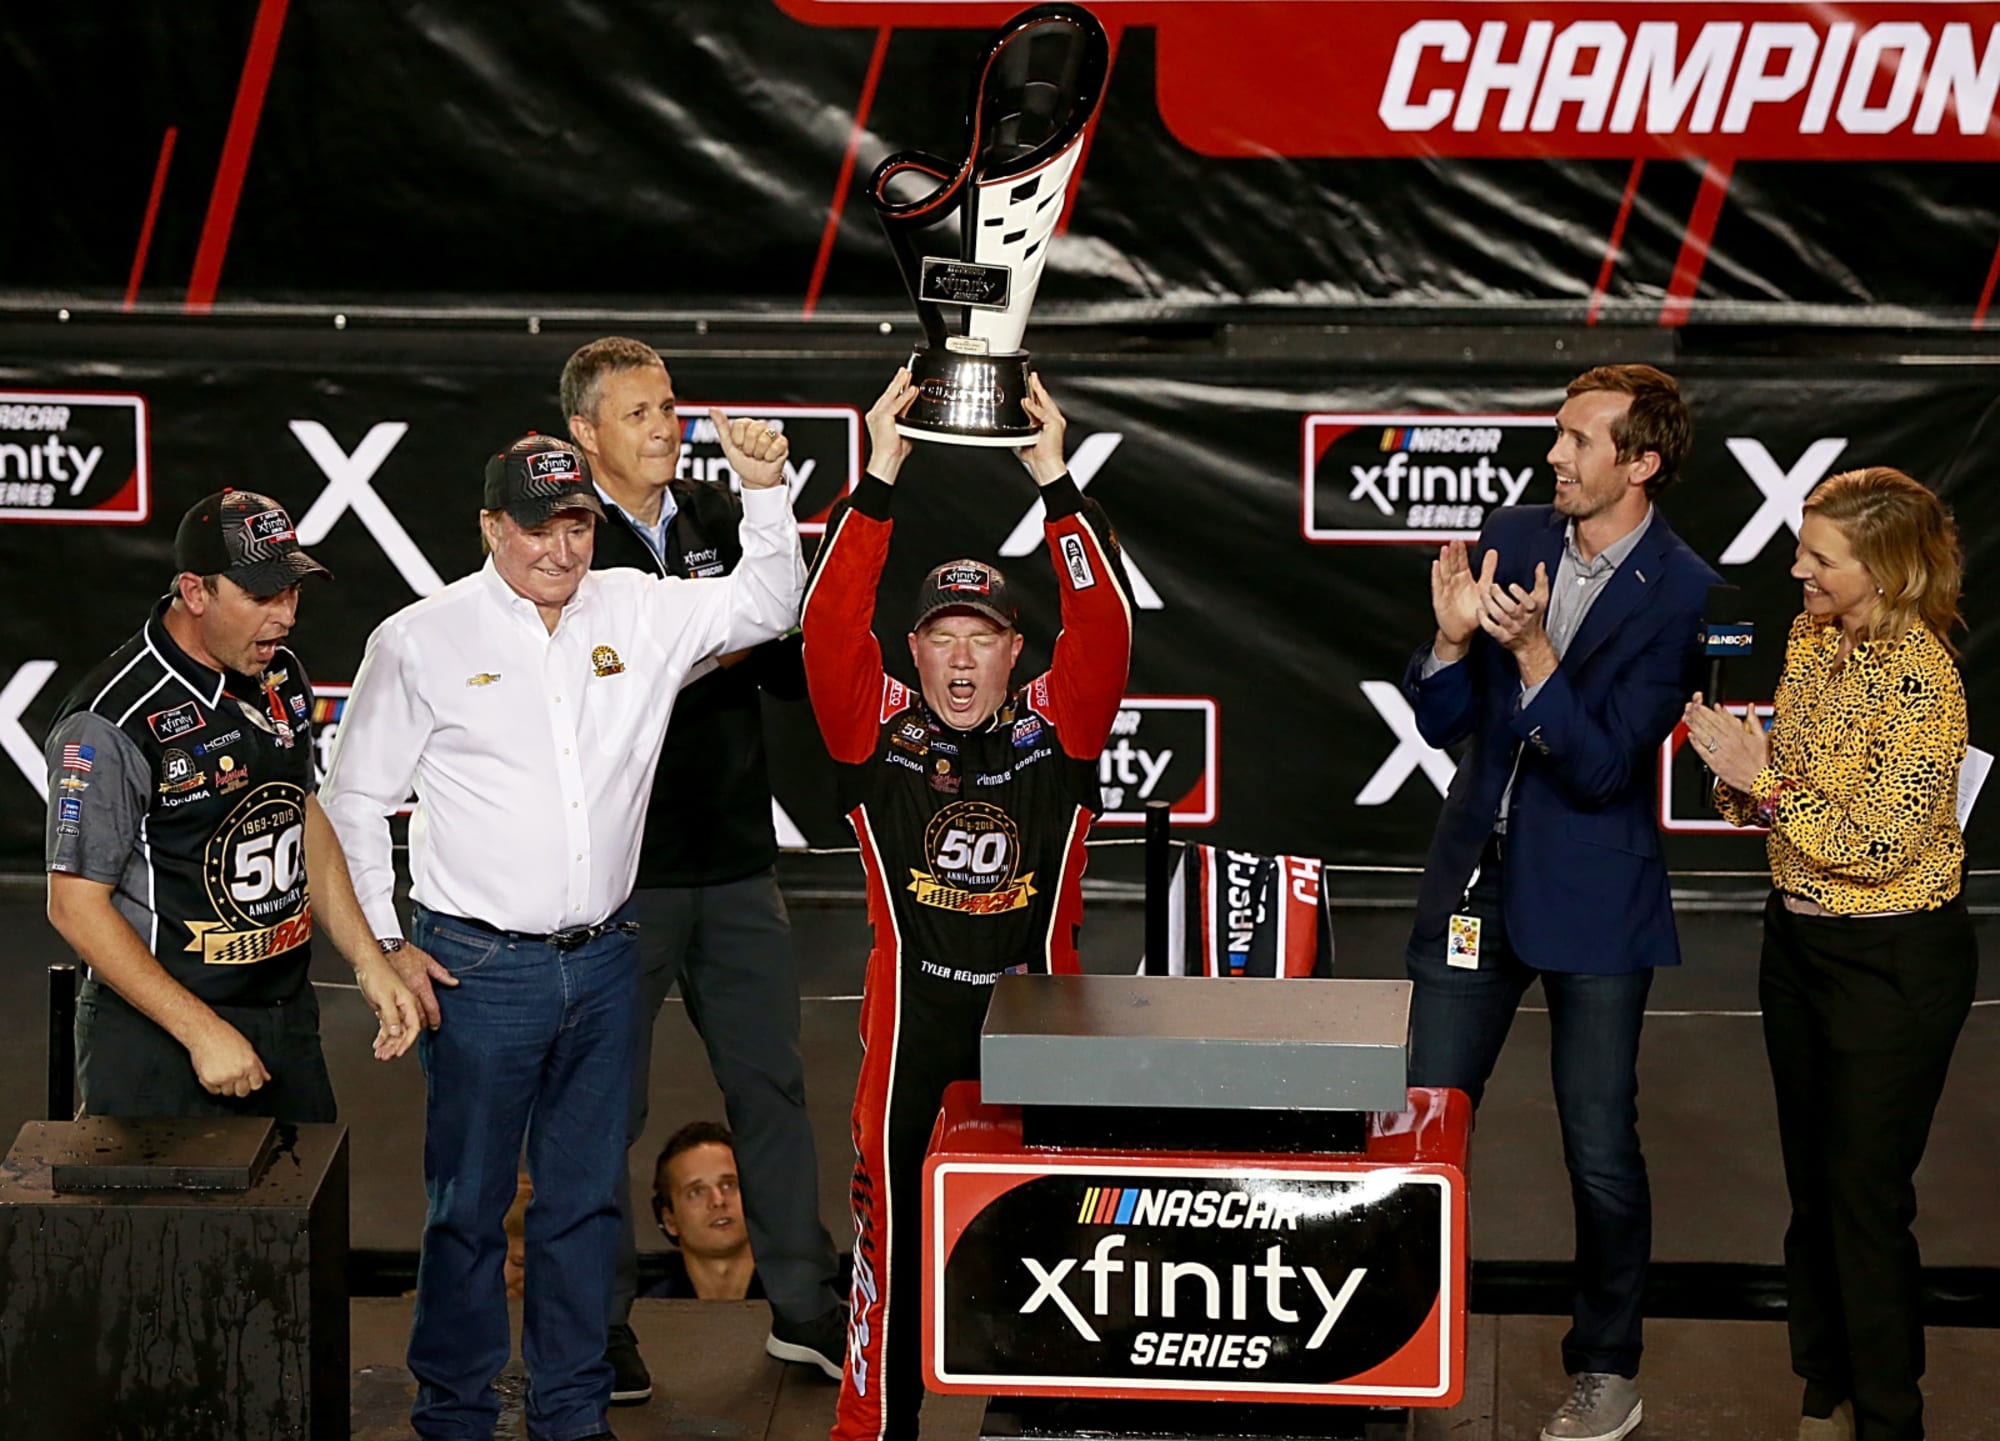 Xfinity Series: Tyler Reddick wins 2019 championship, becomes